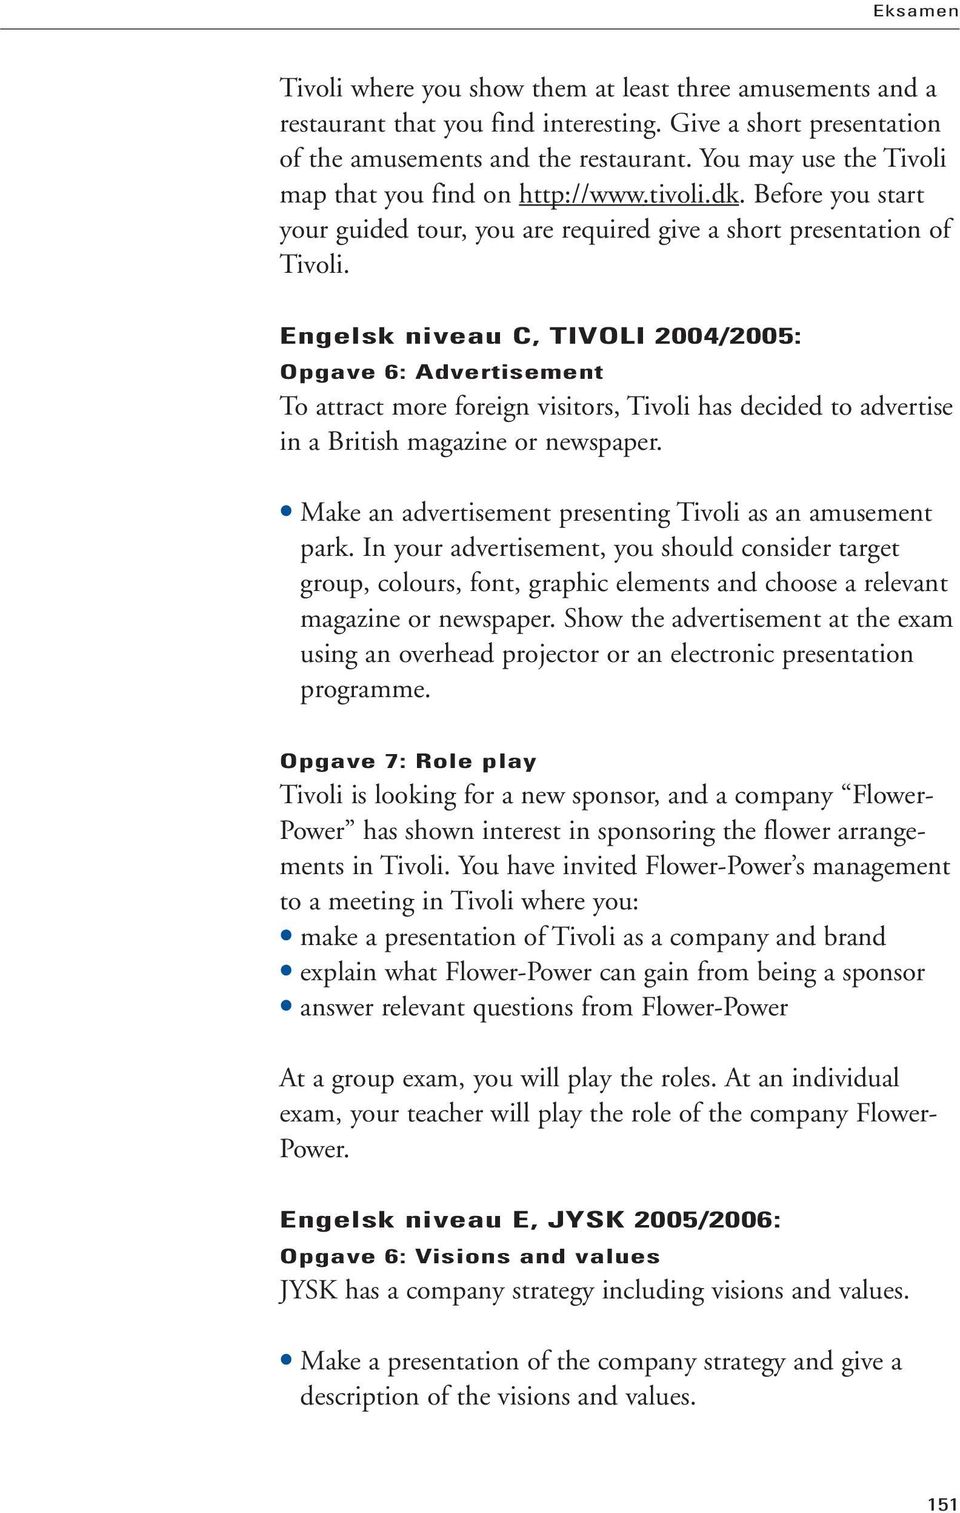 Engelsk niveau C, TIVOLI 2004/2005: in a British magazine or newspaper. Make an advertisement presenting Tivoli as an amusement park.